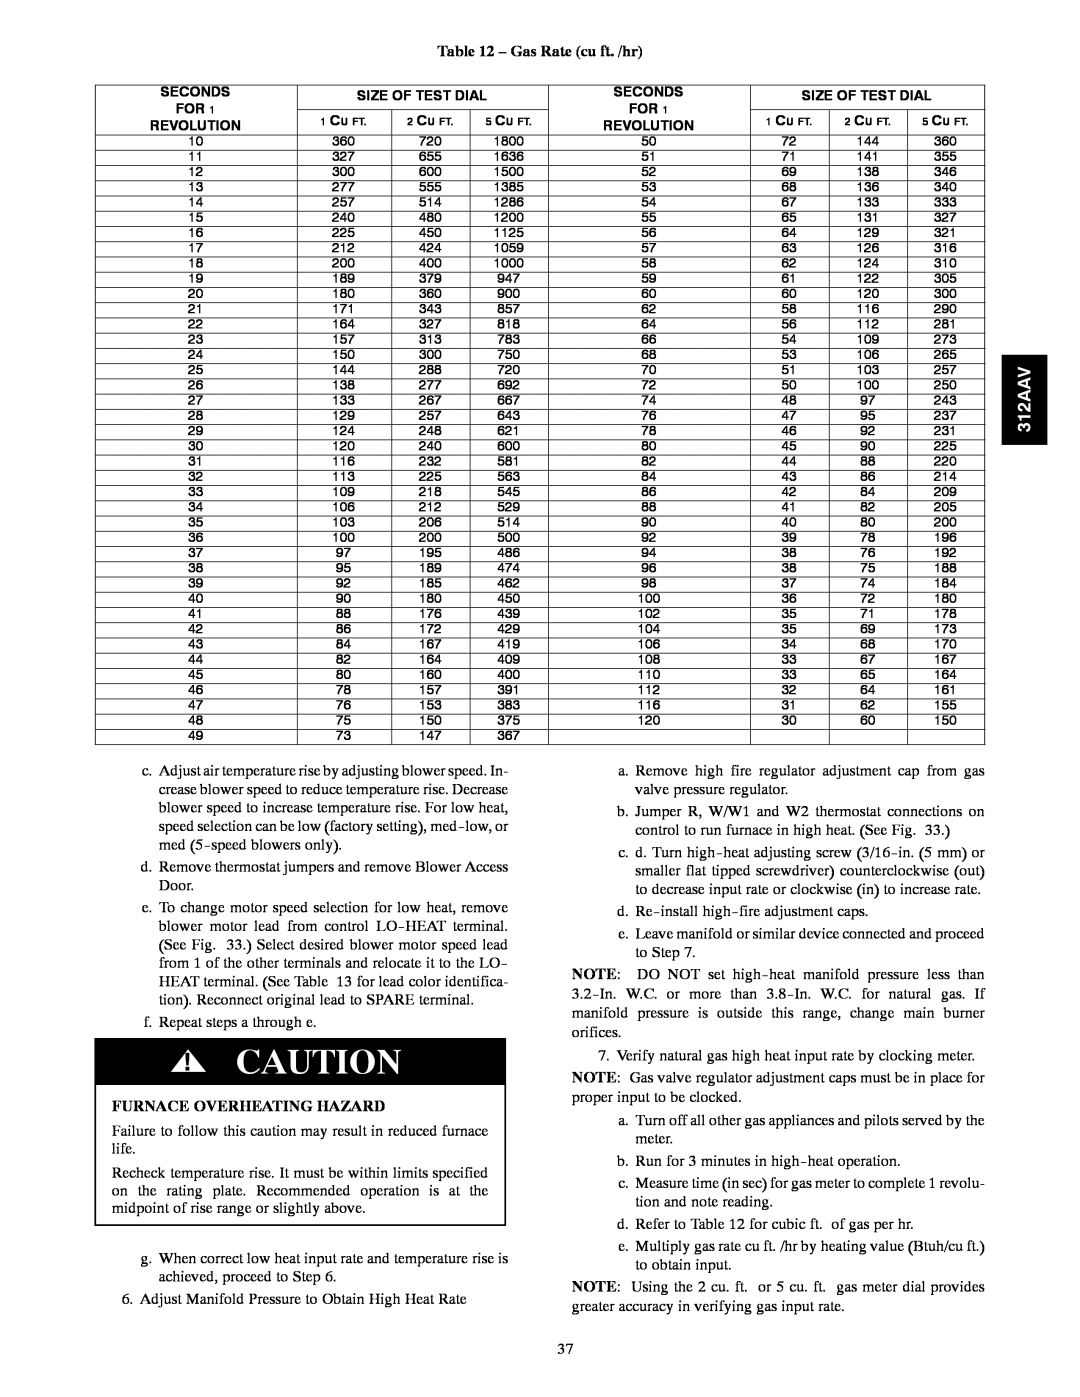 Bryant 312AAV/JAV instruction manual Gas Rate cu ft. /hr, Furnace Overheating Hazard 